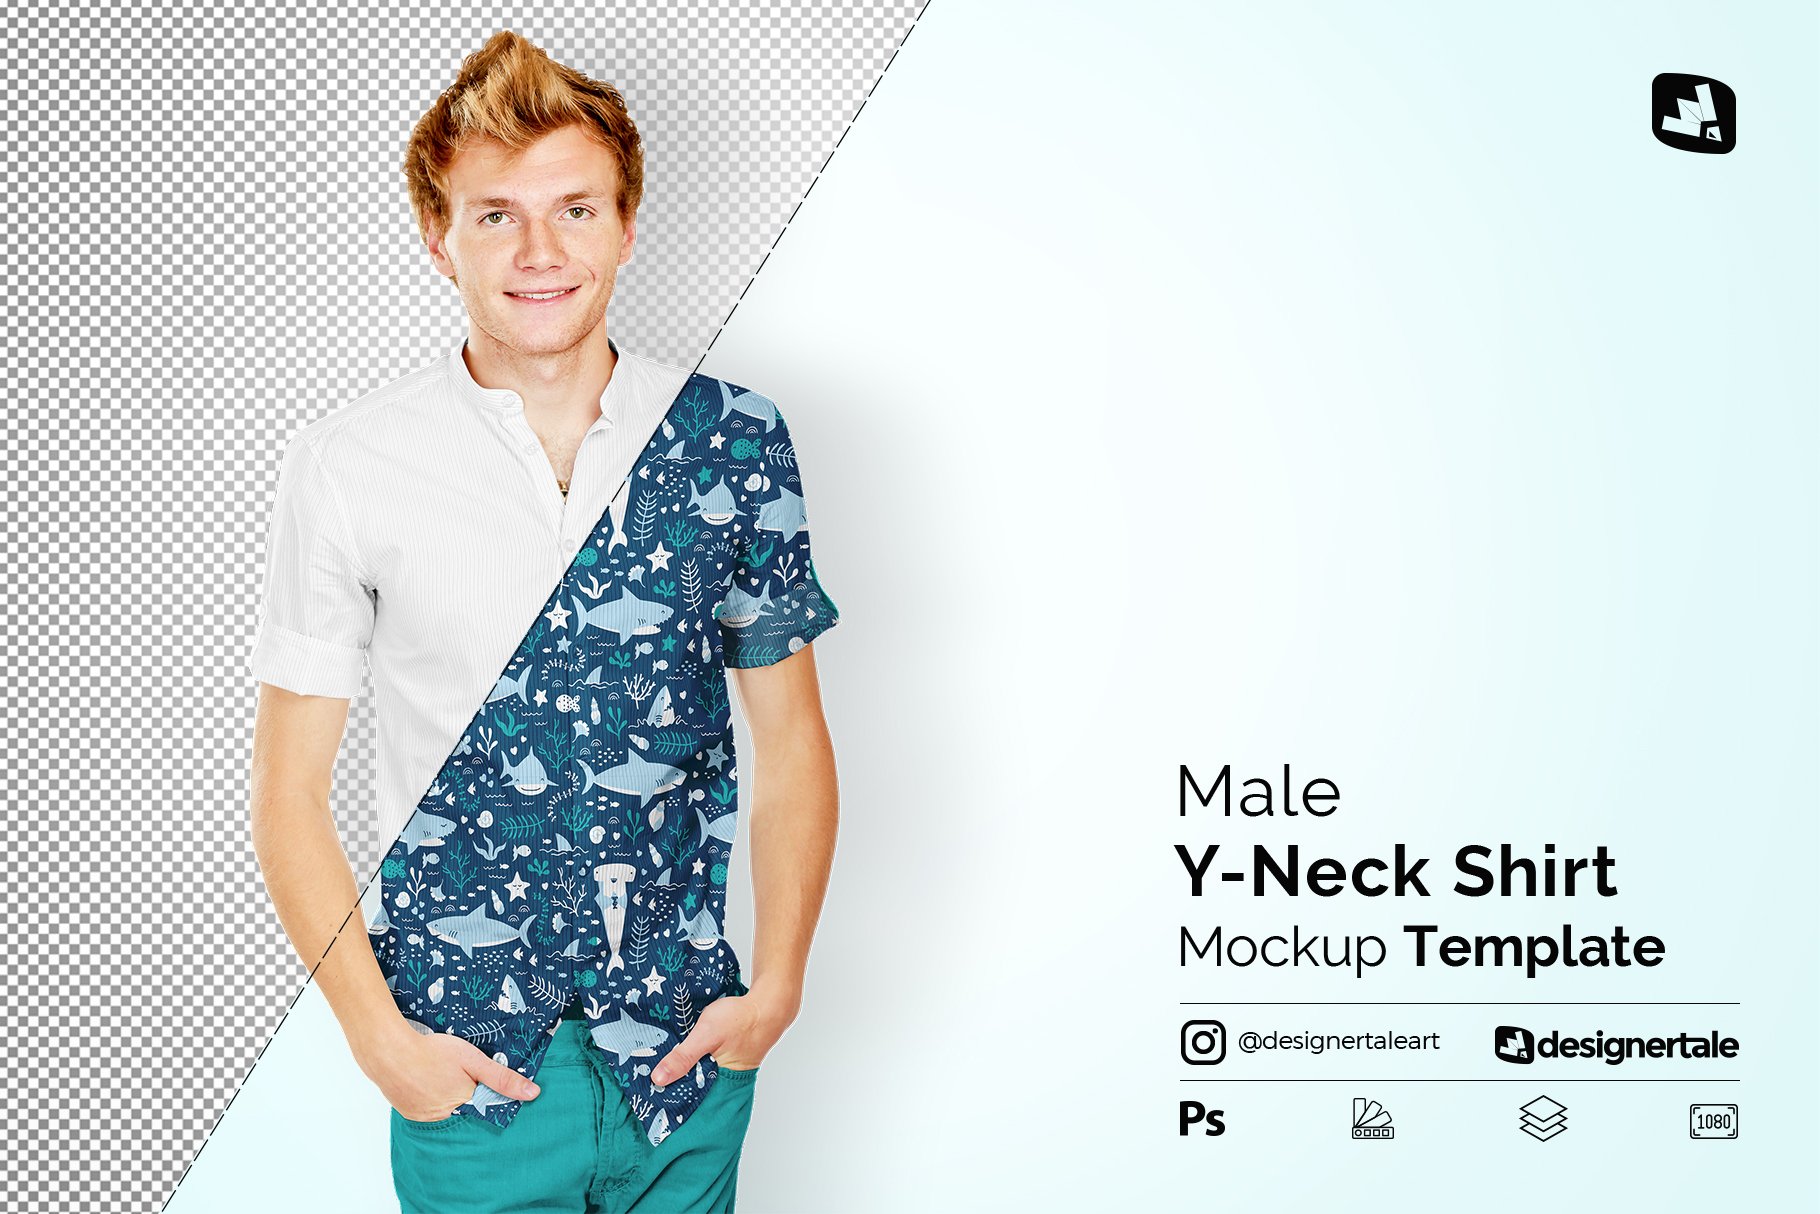 Male Y-Neck Shirt Mockup